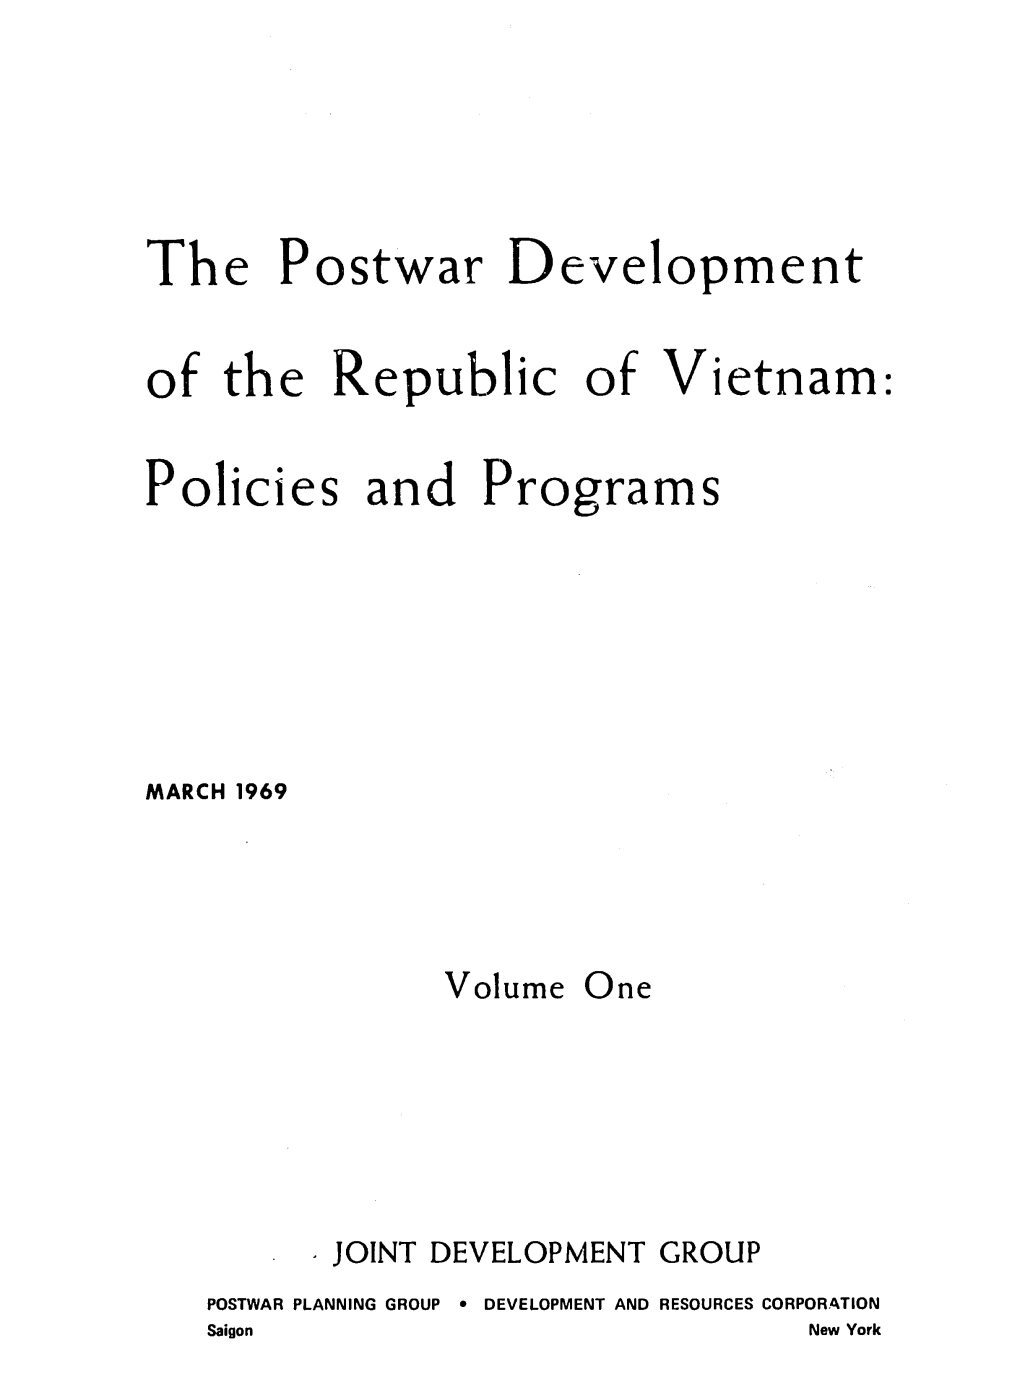 The Postwar Development of the Republic of Vietnam: Policies and Programs